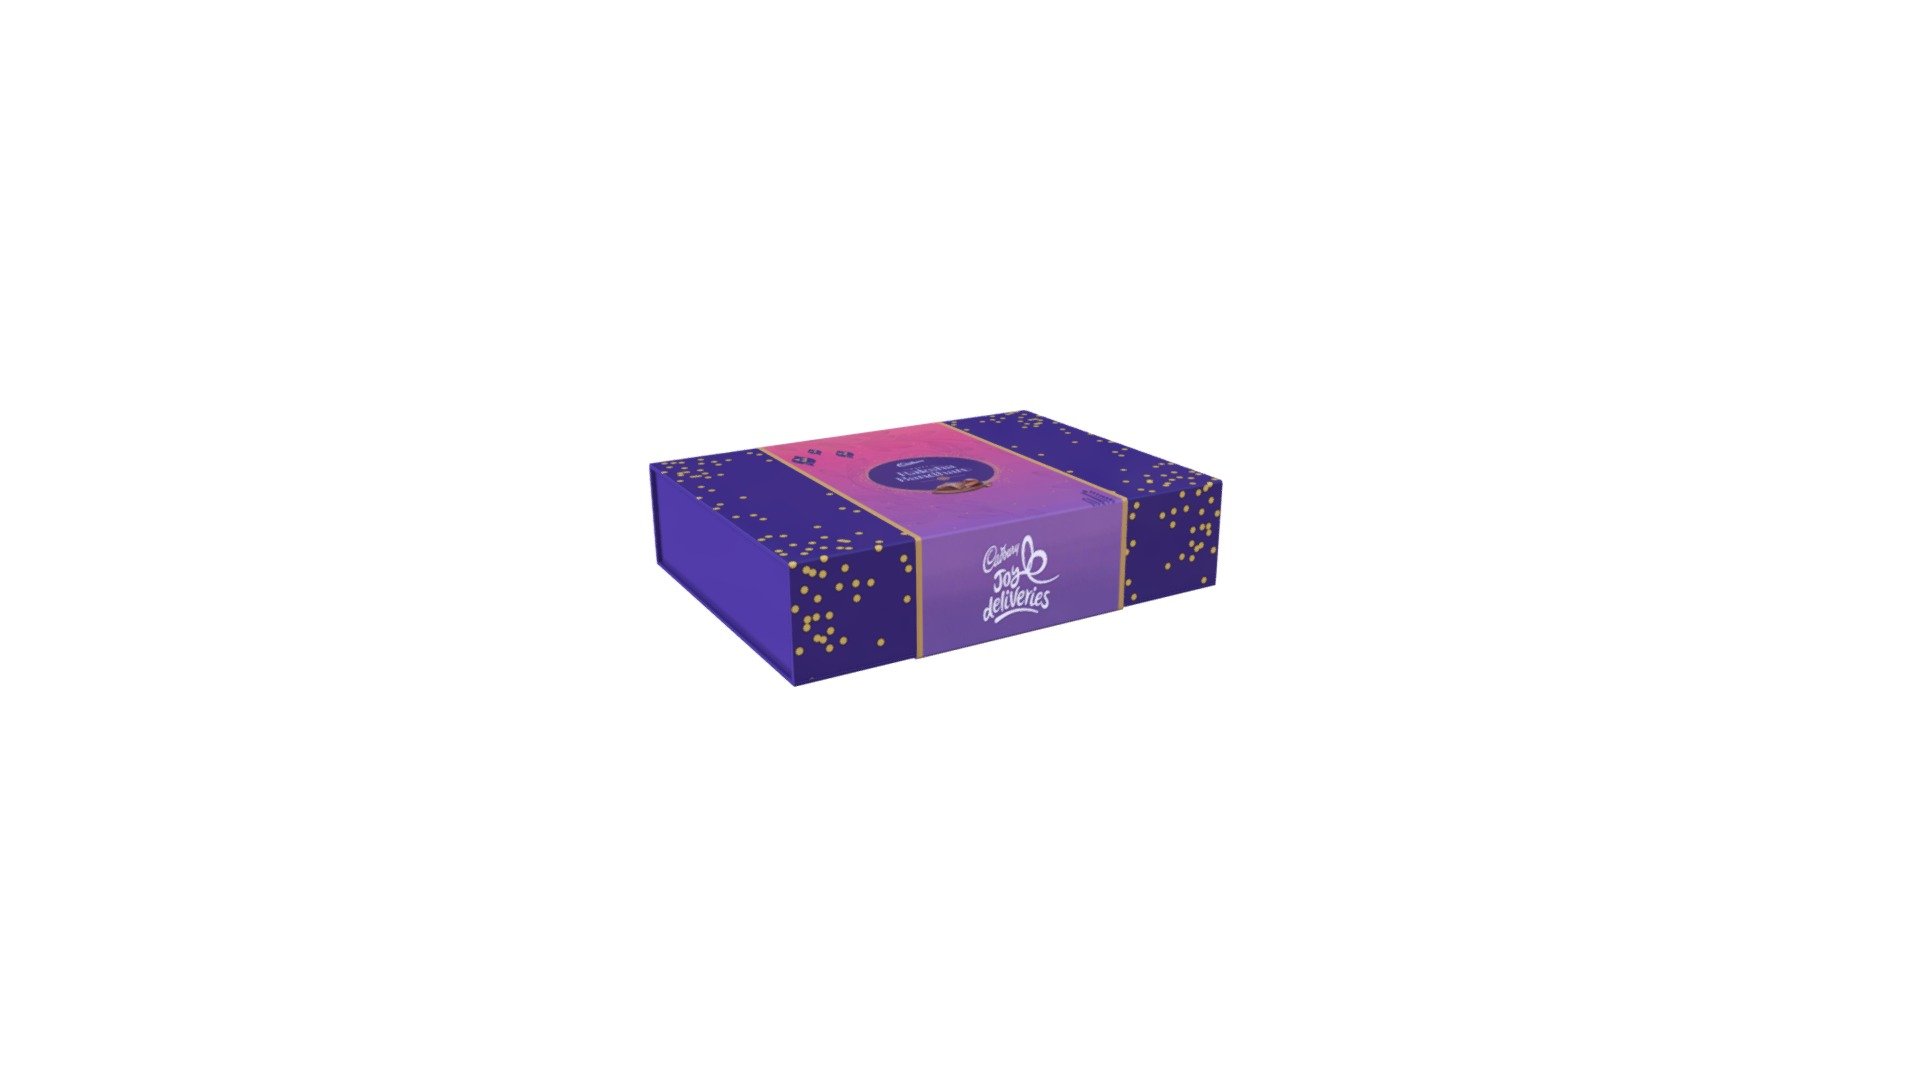 Cadbury Box Test